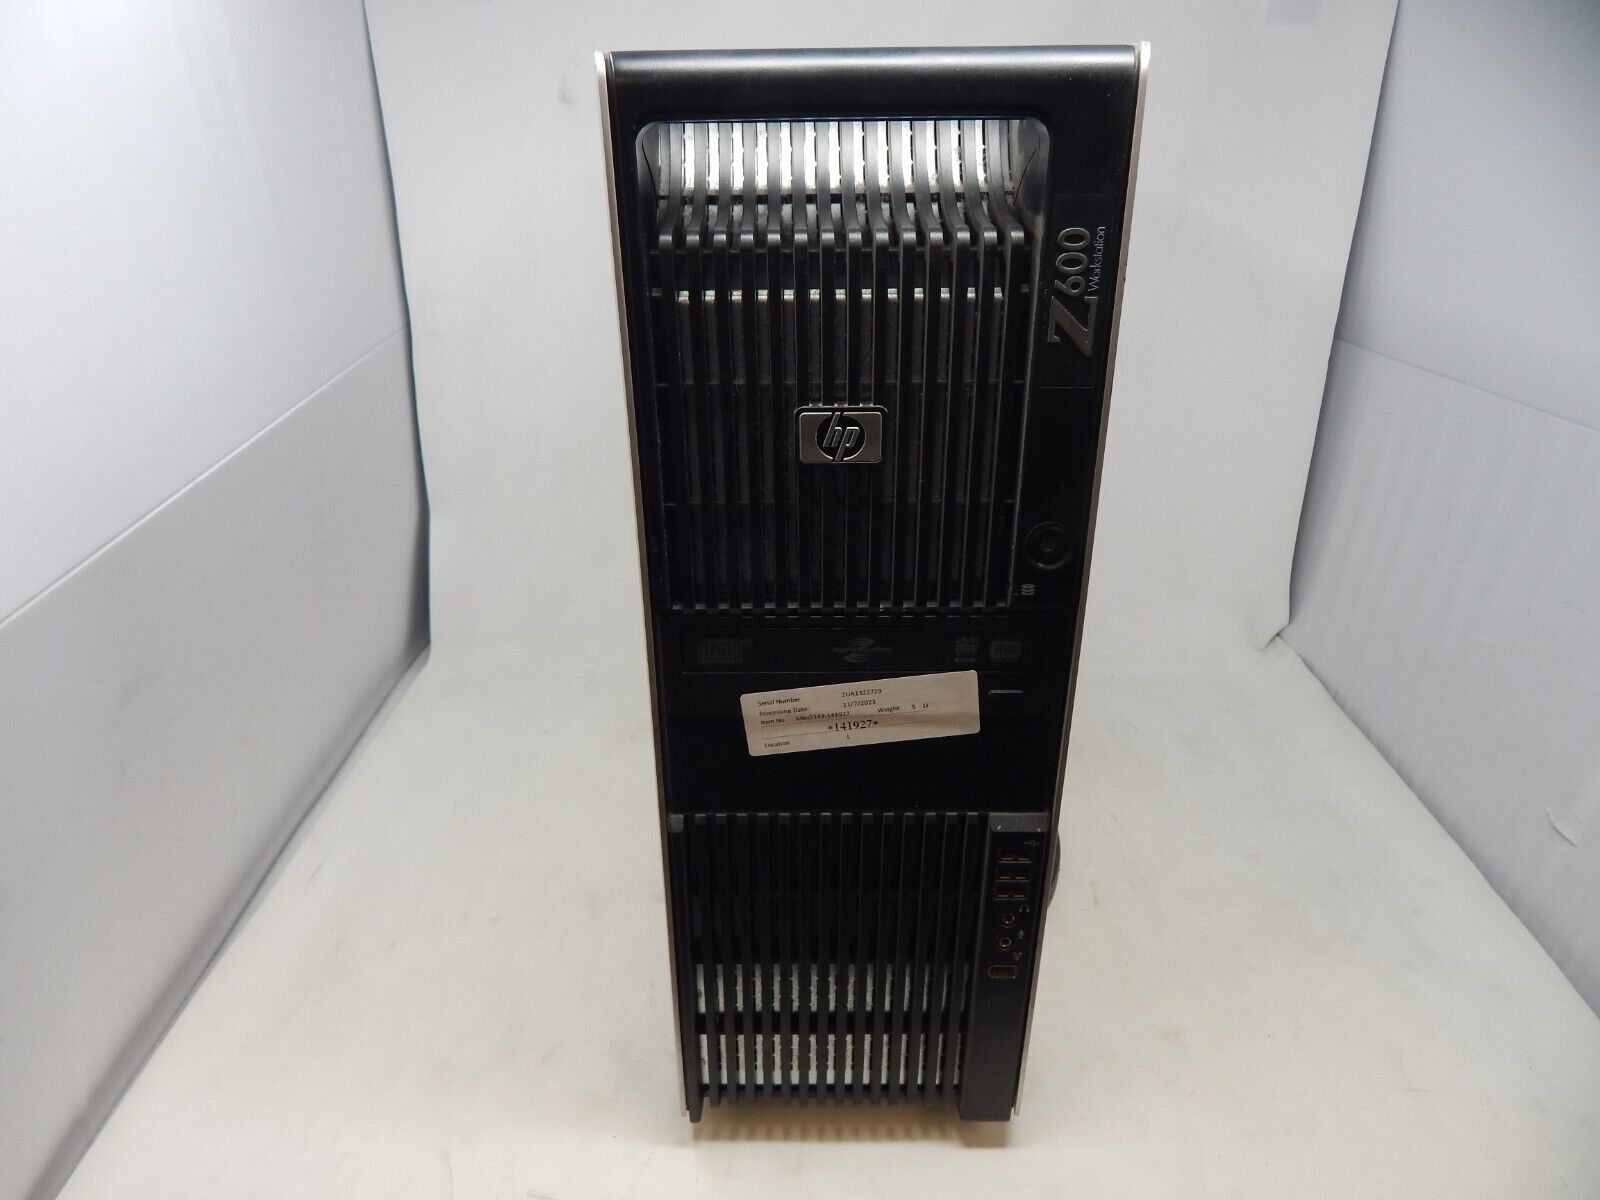 HP Z600 Workstation Xeon E5620 @2.4GHz 6GB RAM 1TB HDD Quadro 2000